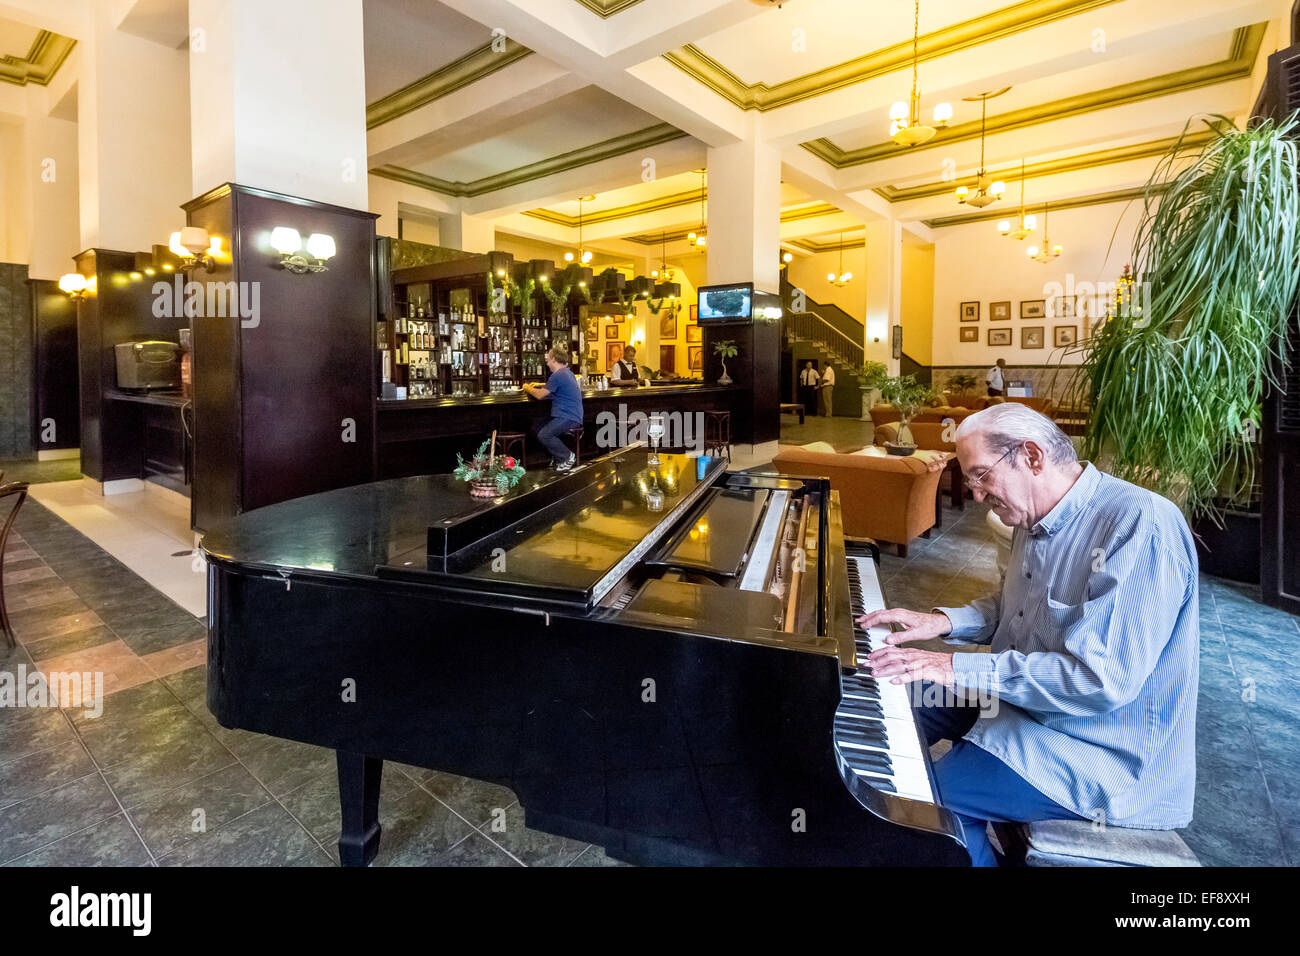 Hotel lobby with a piano player, Amos Mundos Hotel, the hotel of writer Ernest Hemingway, Havana, Cuba Stock Photo